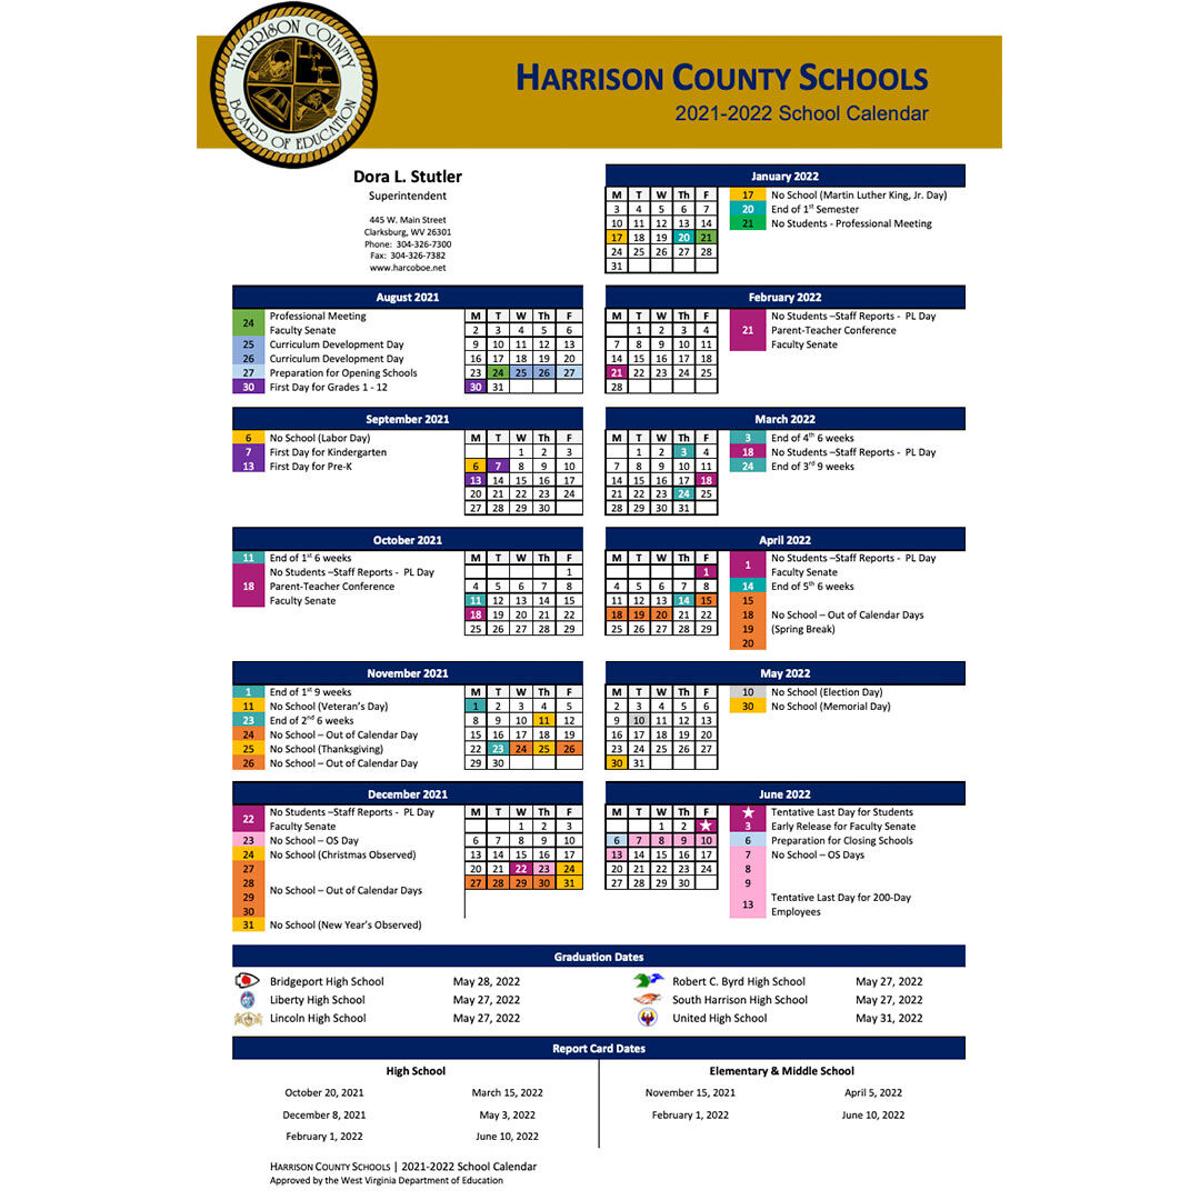 Oregon State Academic Calendar 2022 23 Harrison County Schools Academic Calendar 2021-22 | Wv News | Wvnews.com